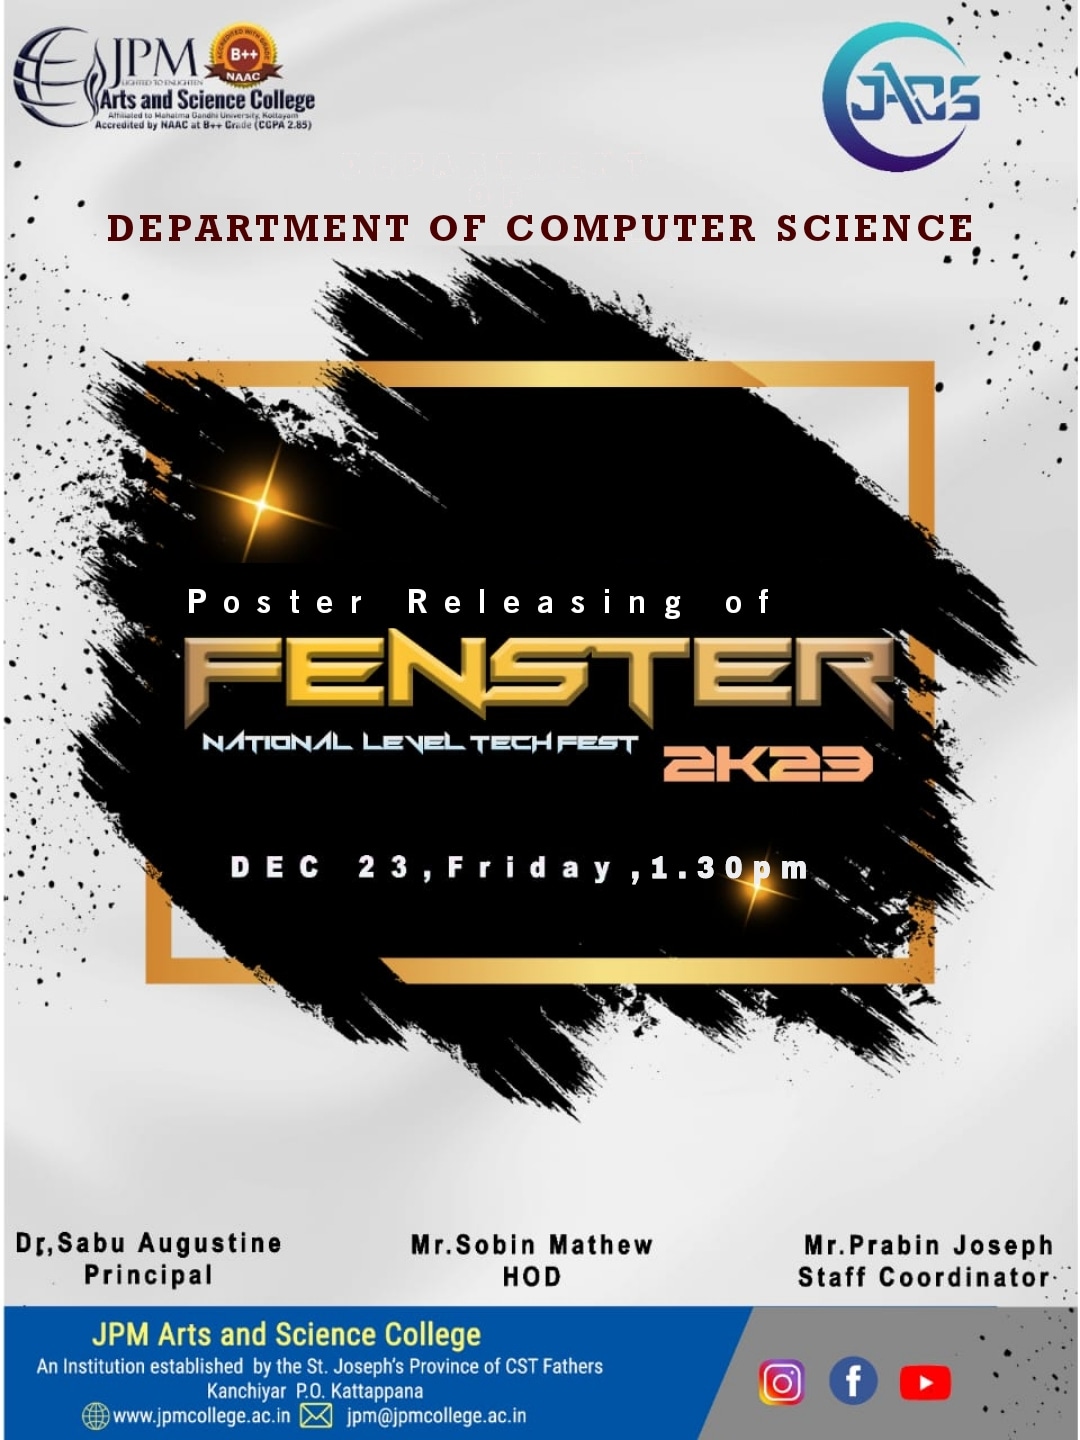 Fenster 2K23 - Poster Release event